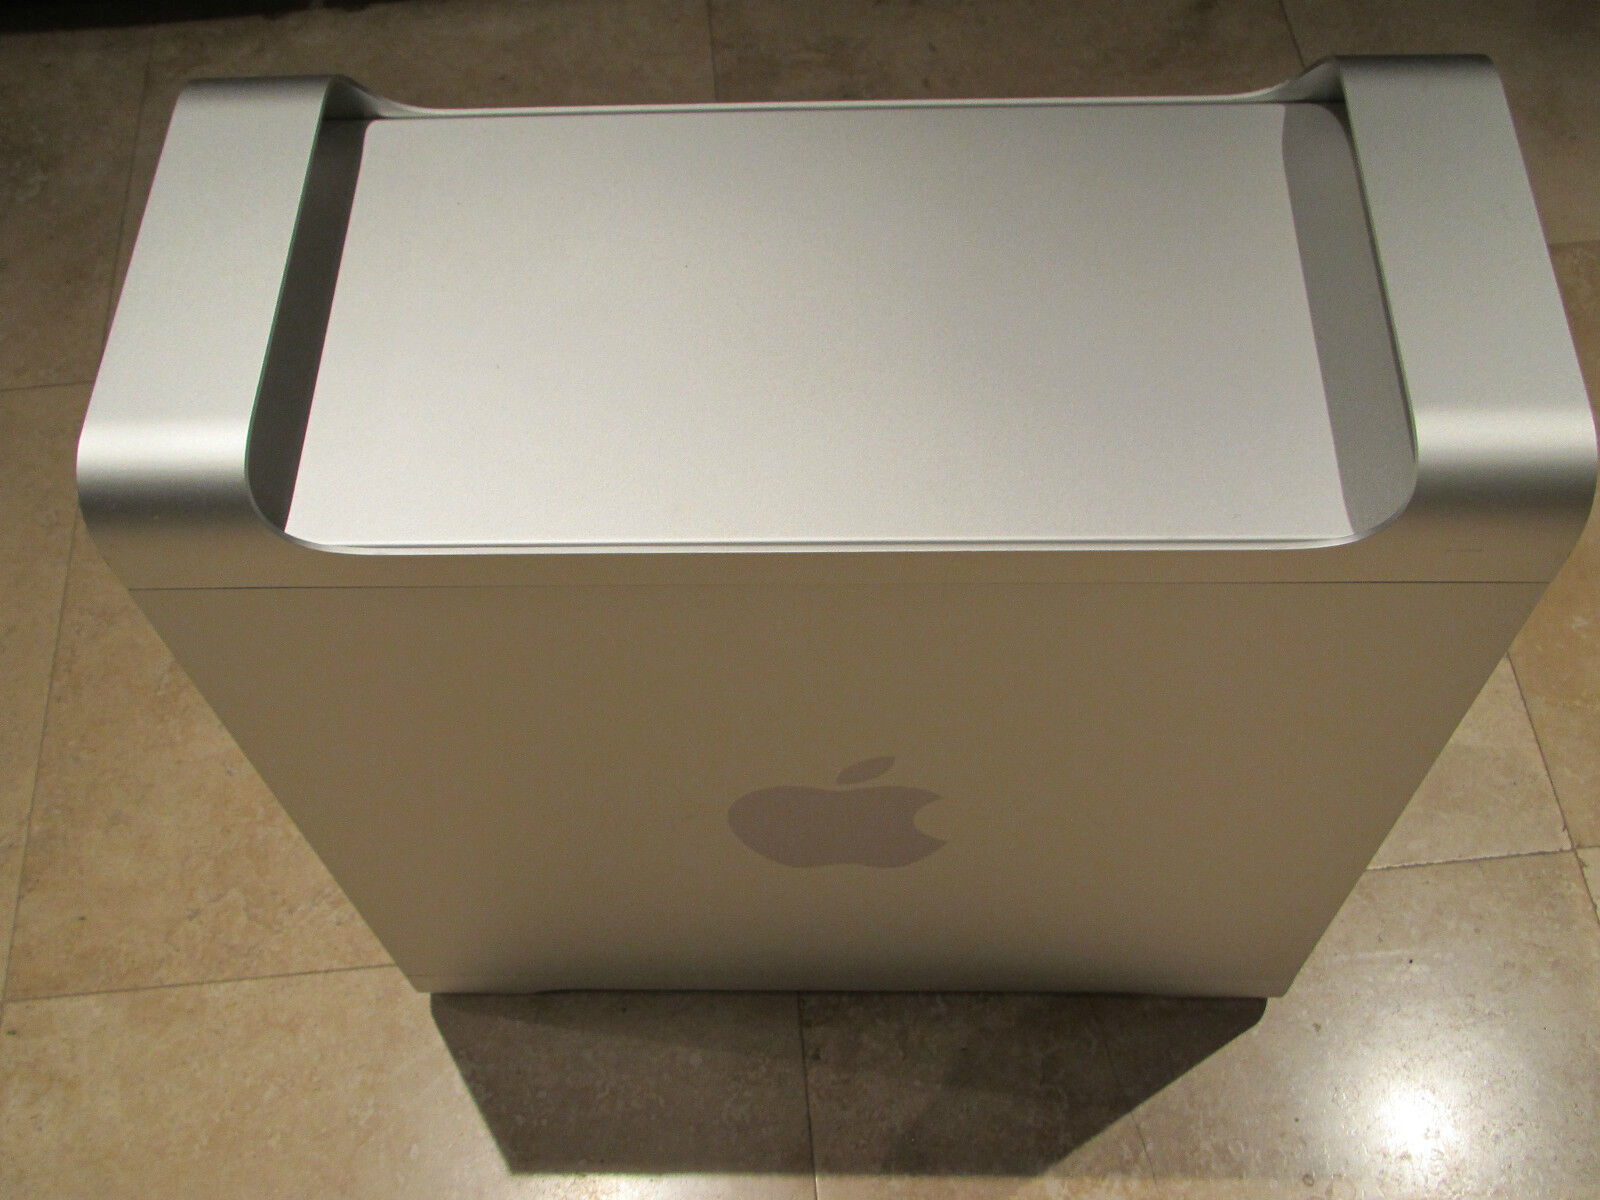 Original 2010 Apple Mac Pro Tower 5,1 12-Core 3.33Ghz Westmere 16GB 1TB ATI 5770